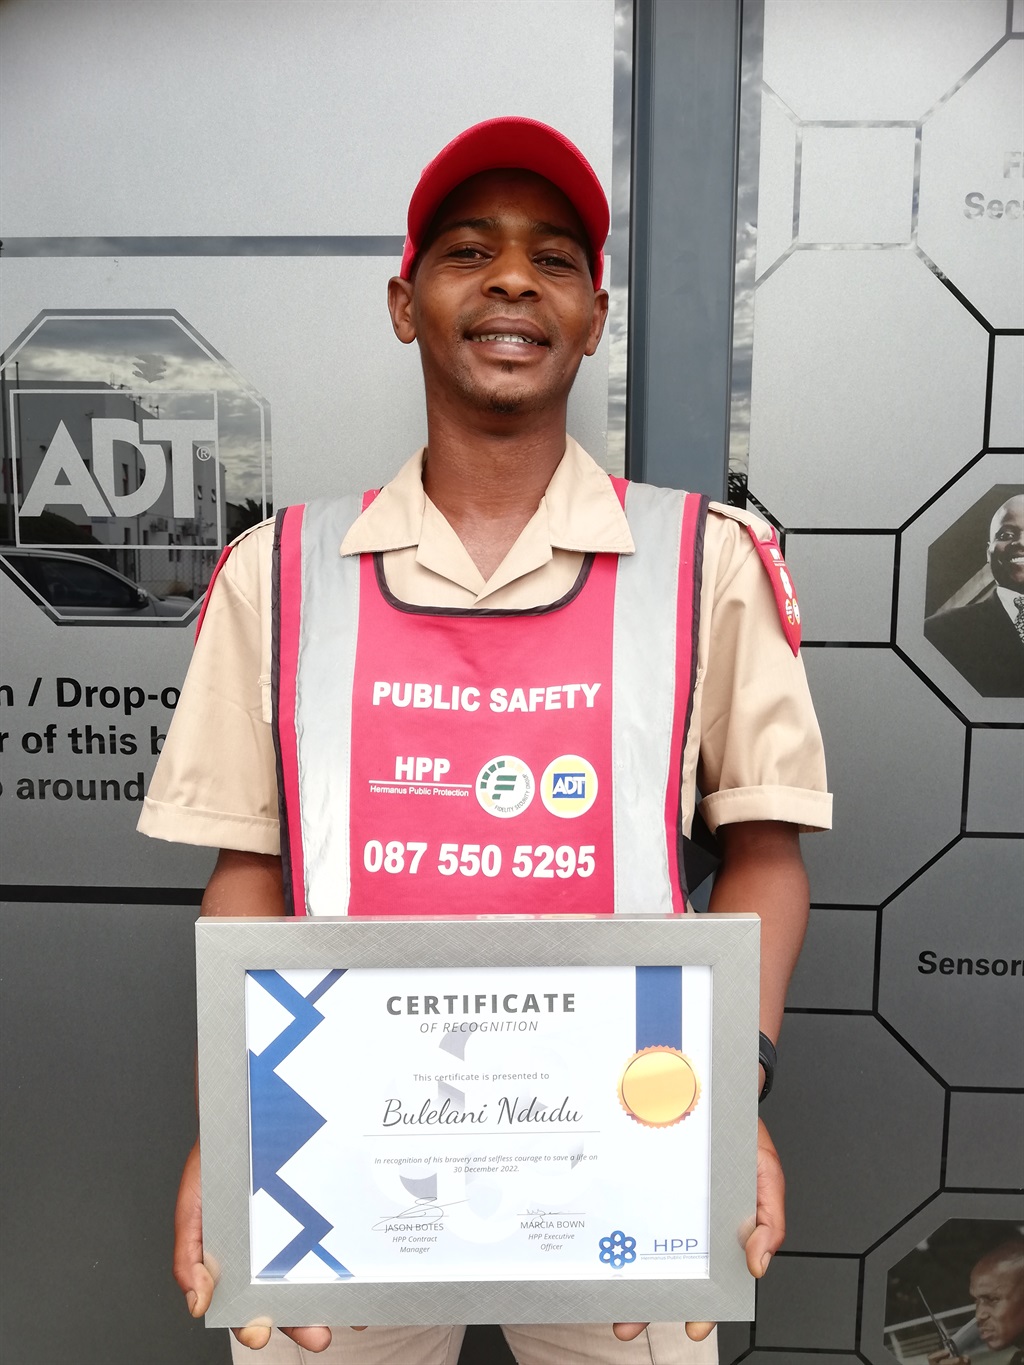 Bulelani Ndudu with his certificate.